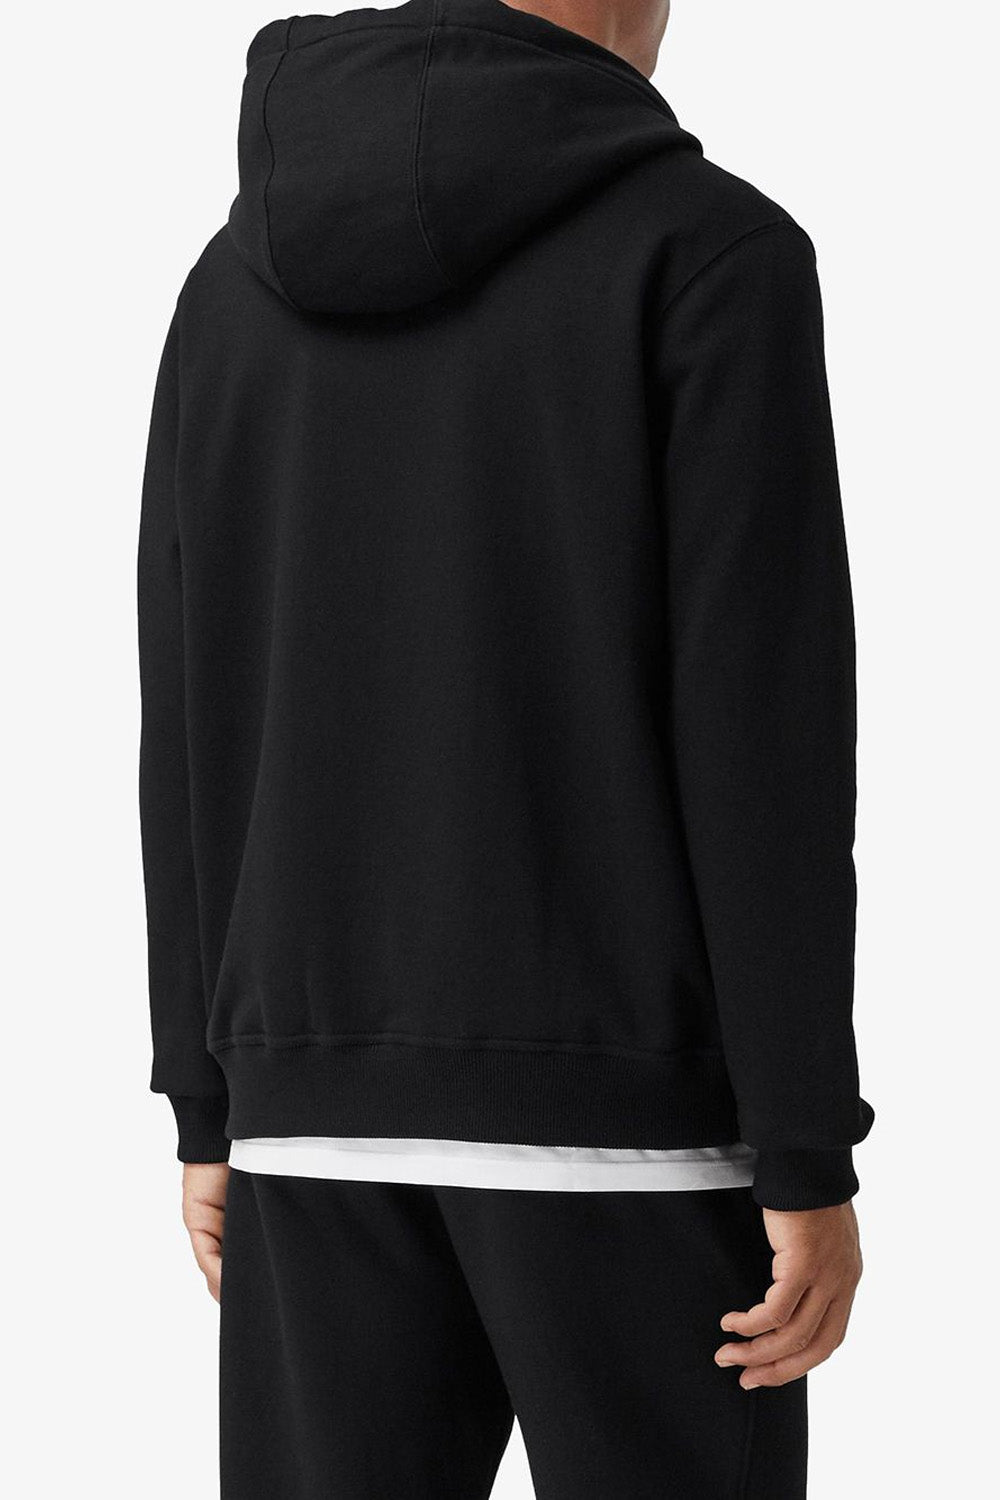 Burberry Icon Stripe zip-up hoodie